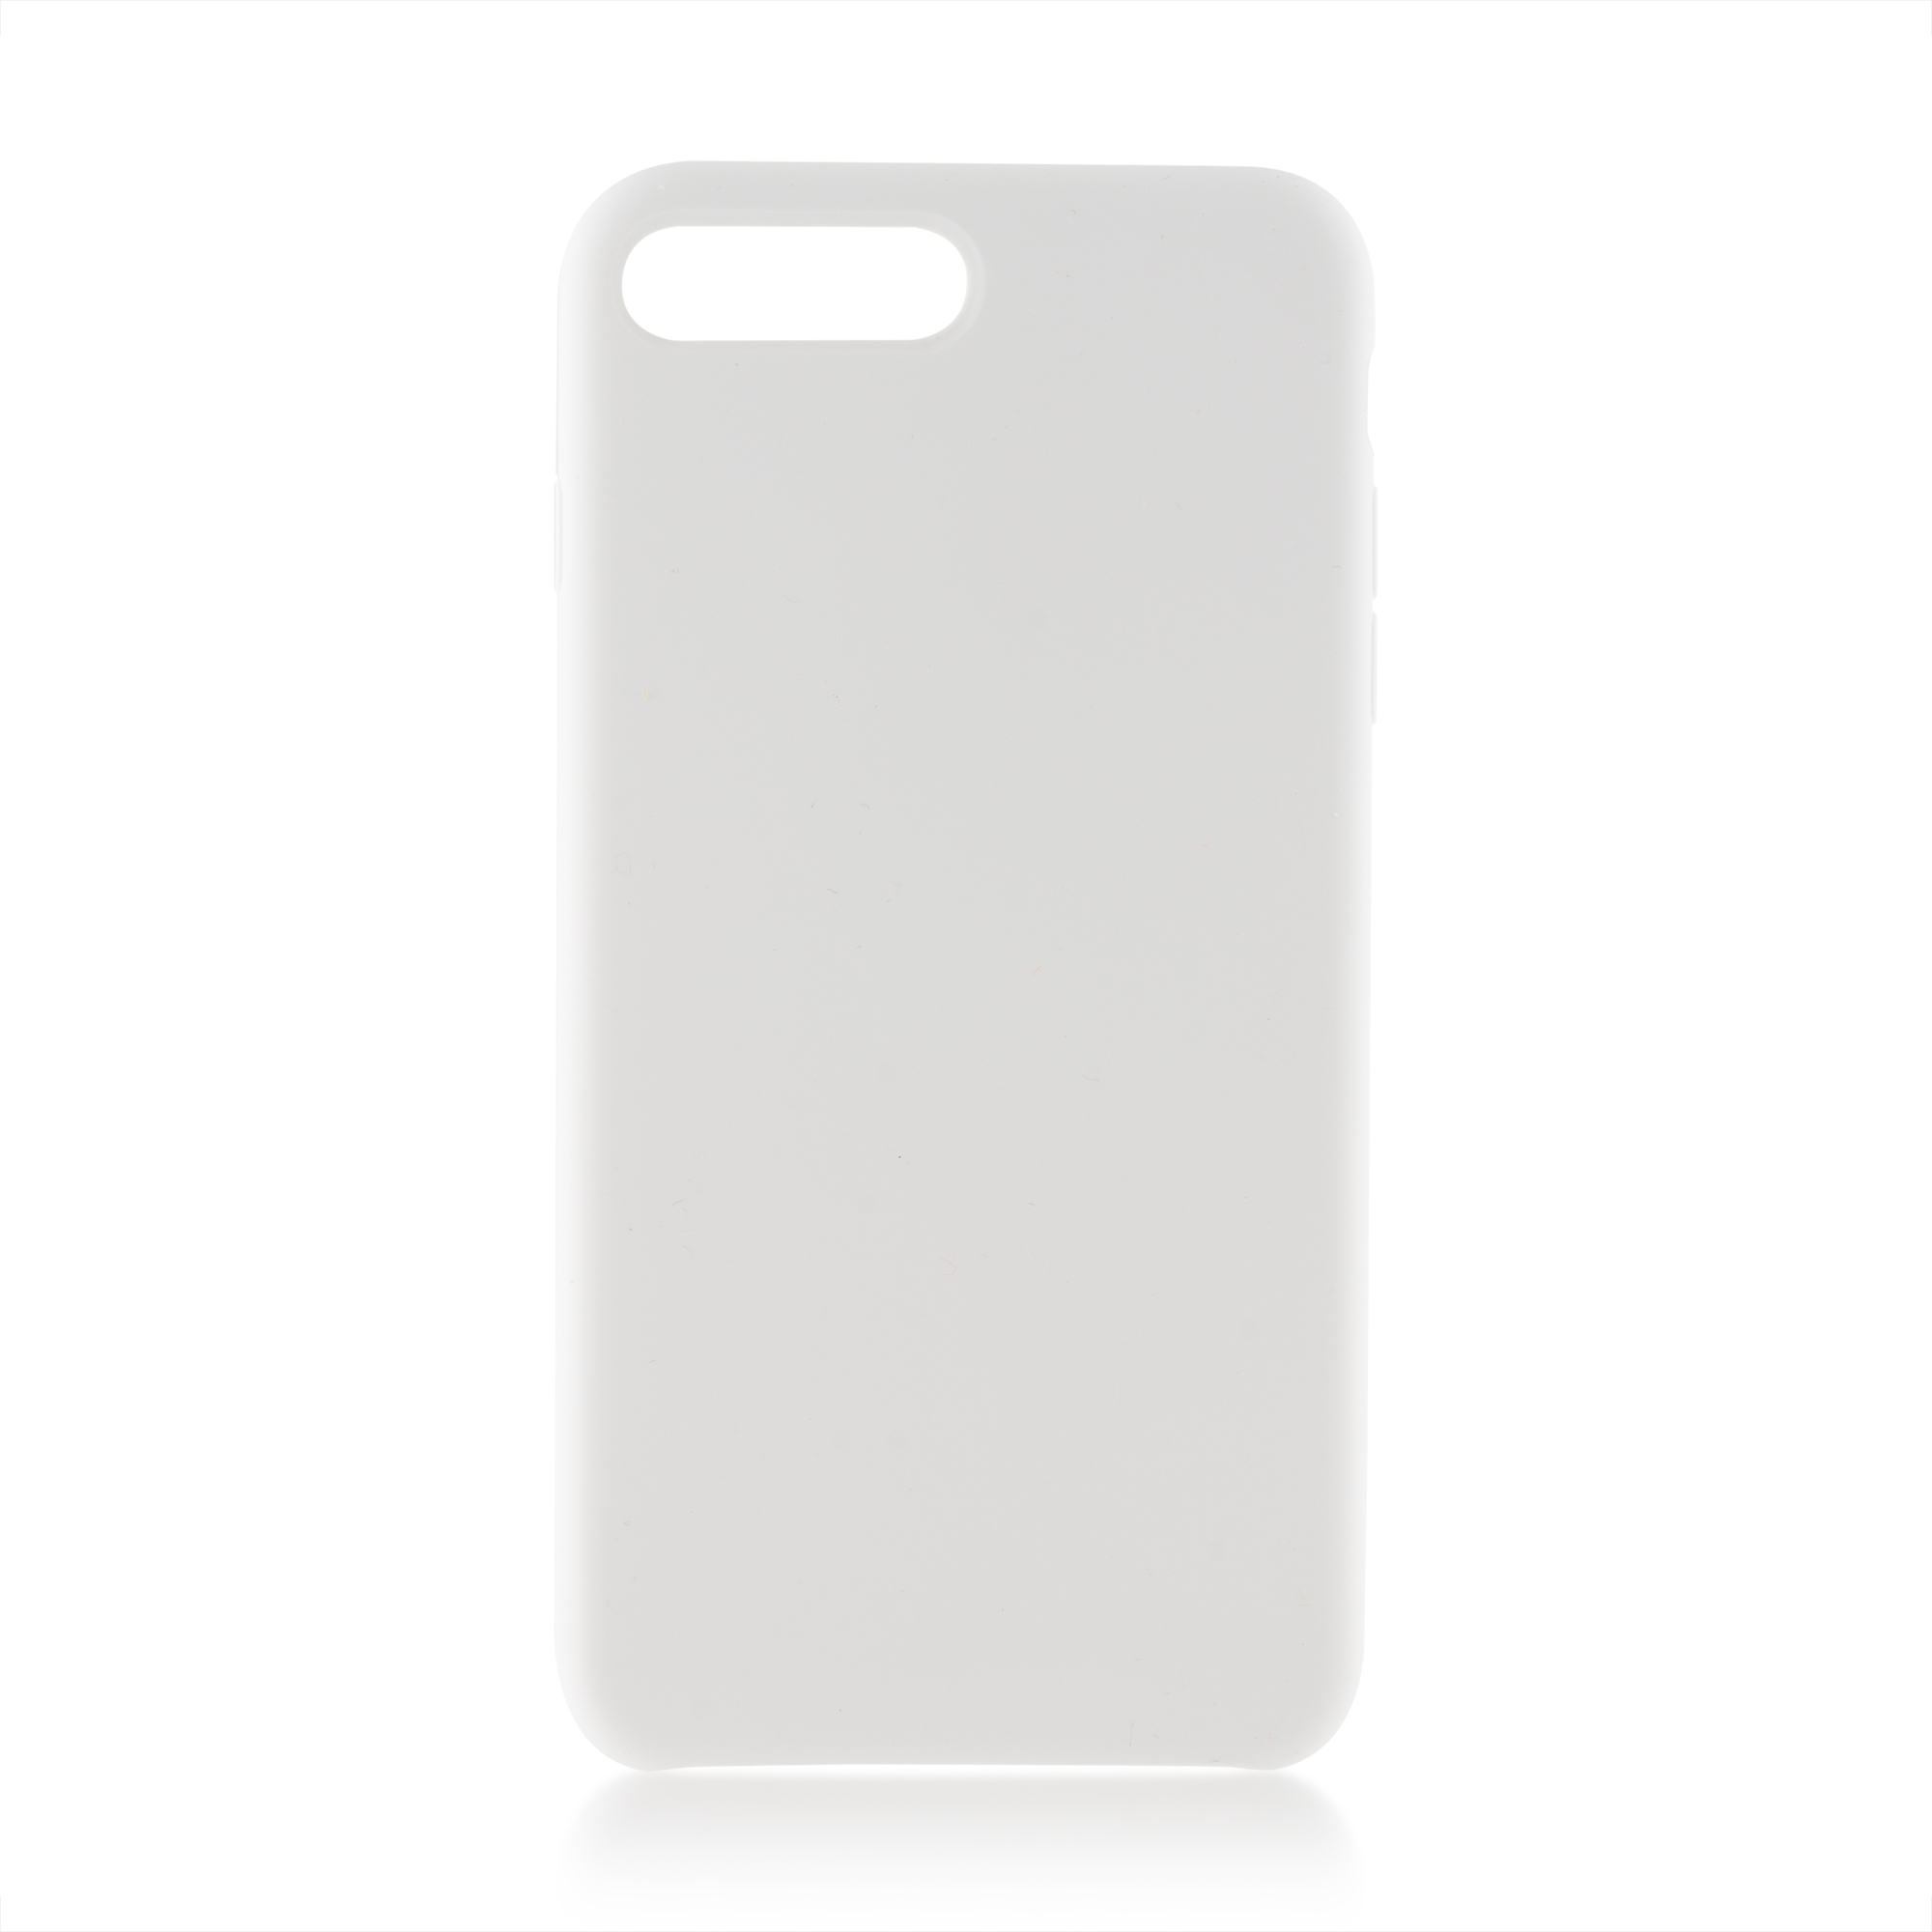 Чехол BROSCO Softrubber для смартфона Apple iPhone 8 Plus, soft-touch, белый (IP8P-SOFTRUBBER-WHITE)